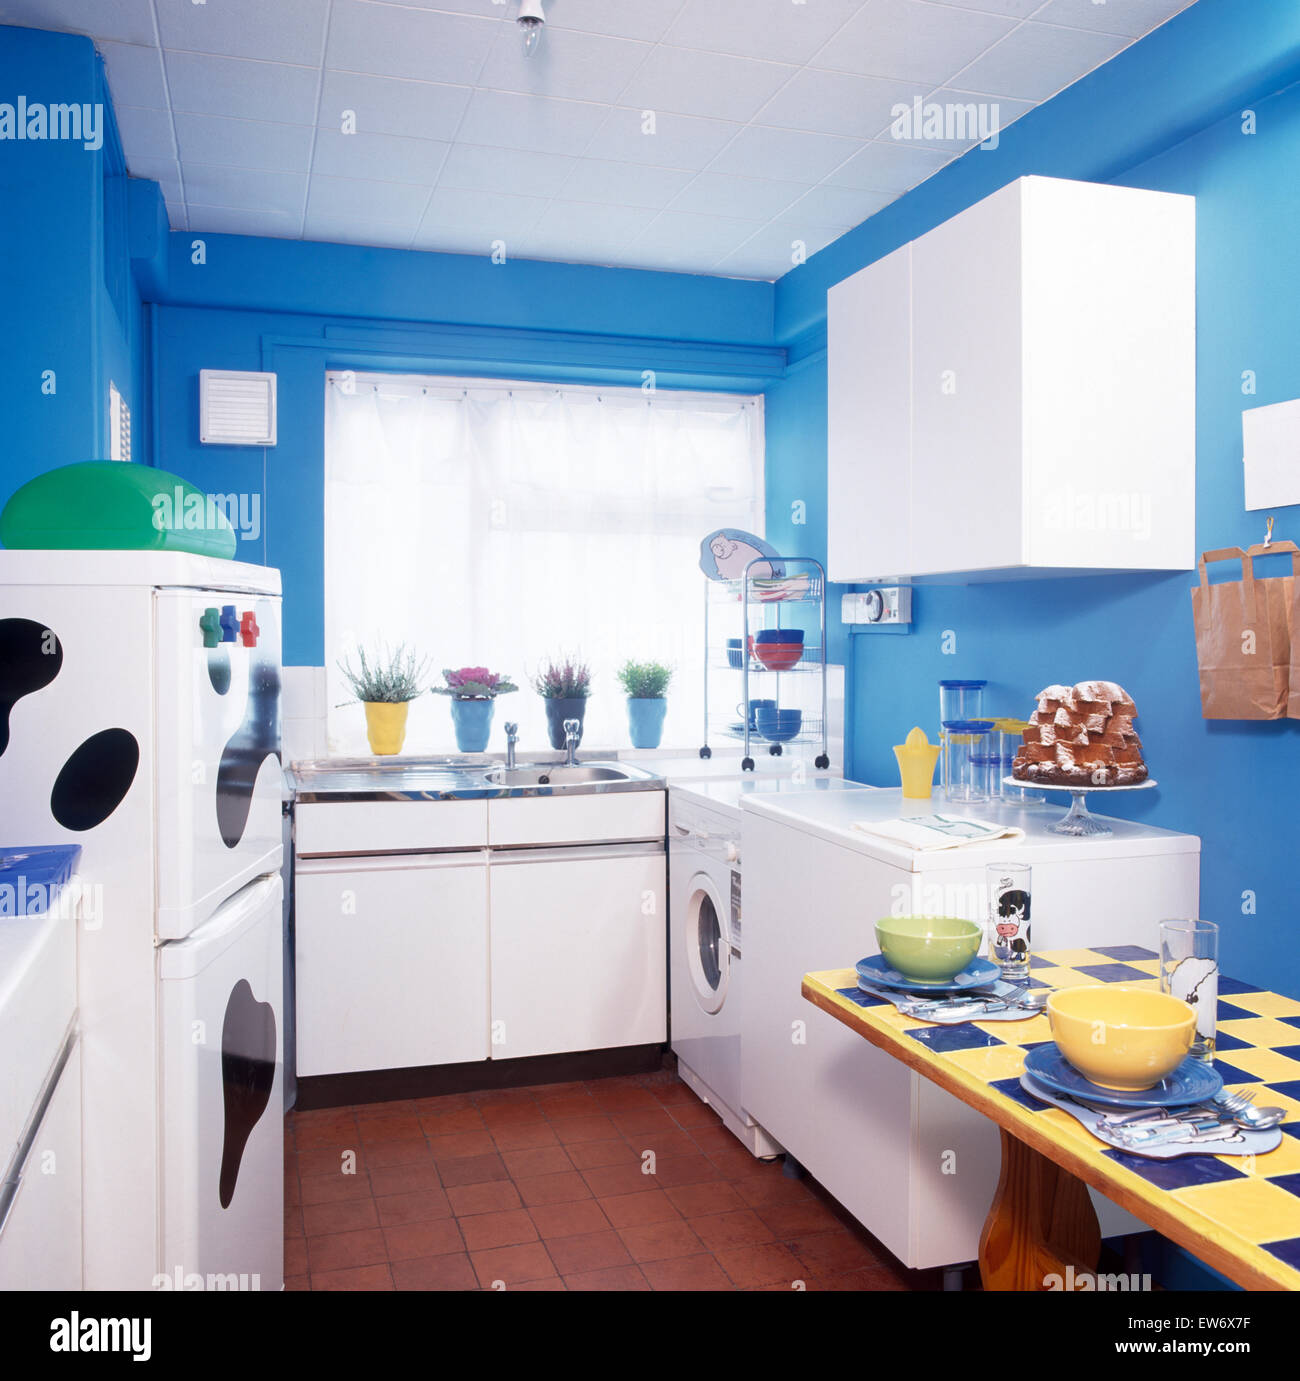 Bright blue, economy style nineties kitchen Stock Photo